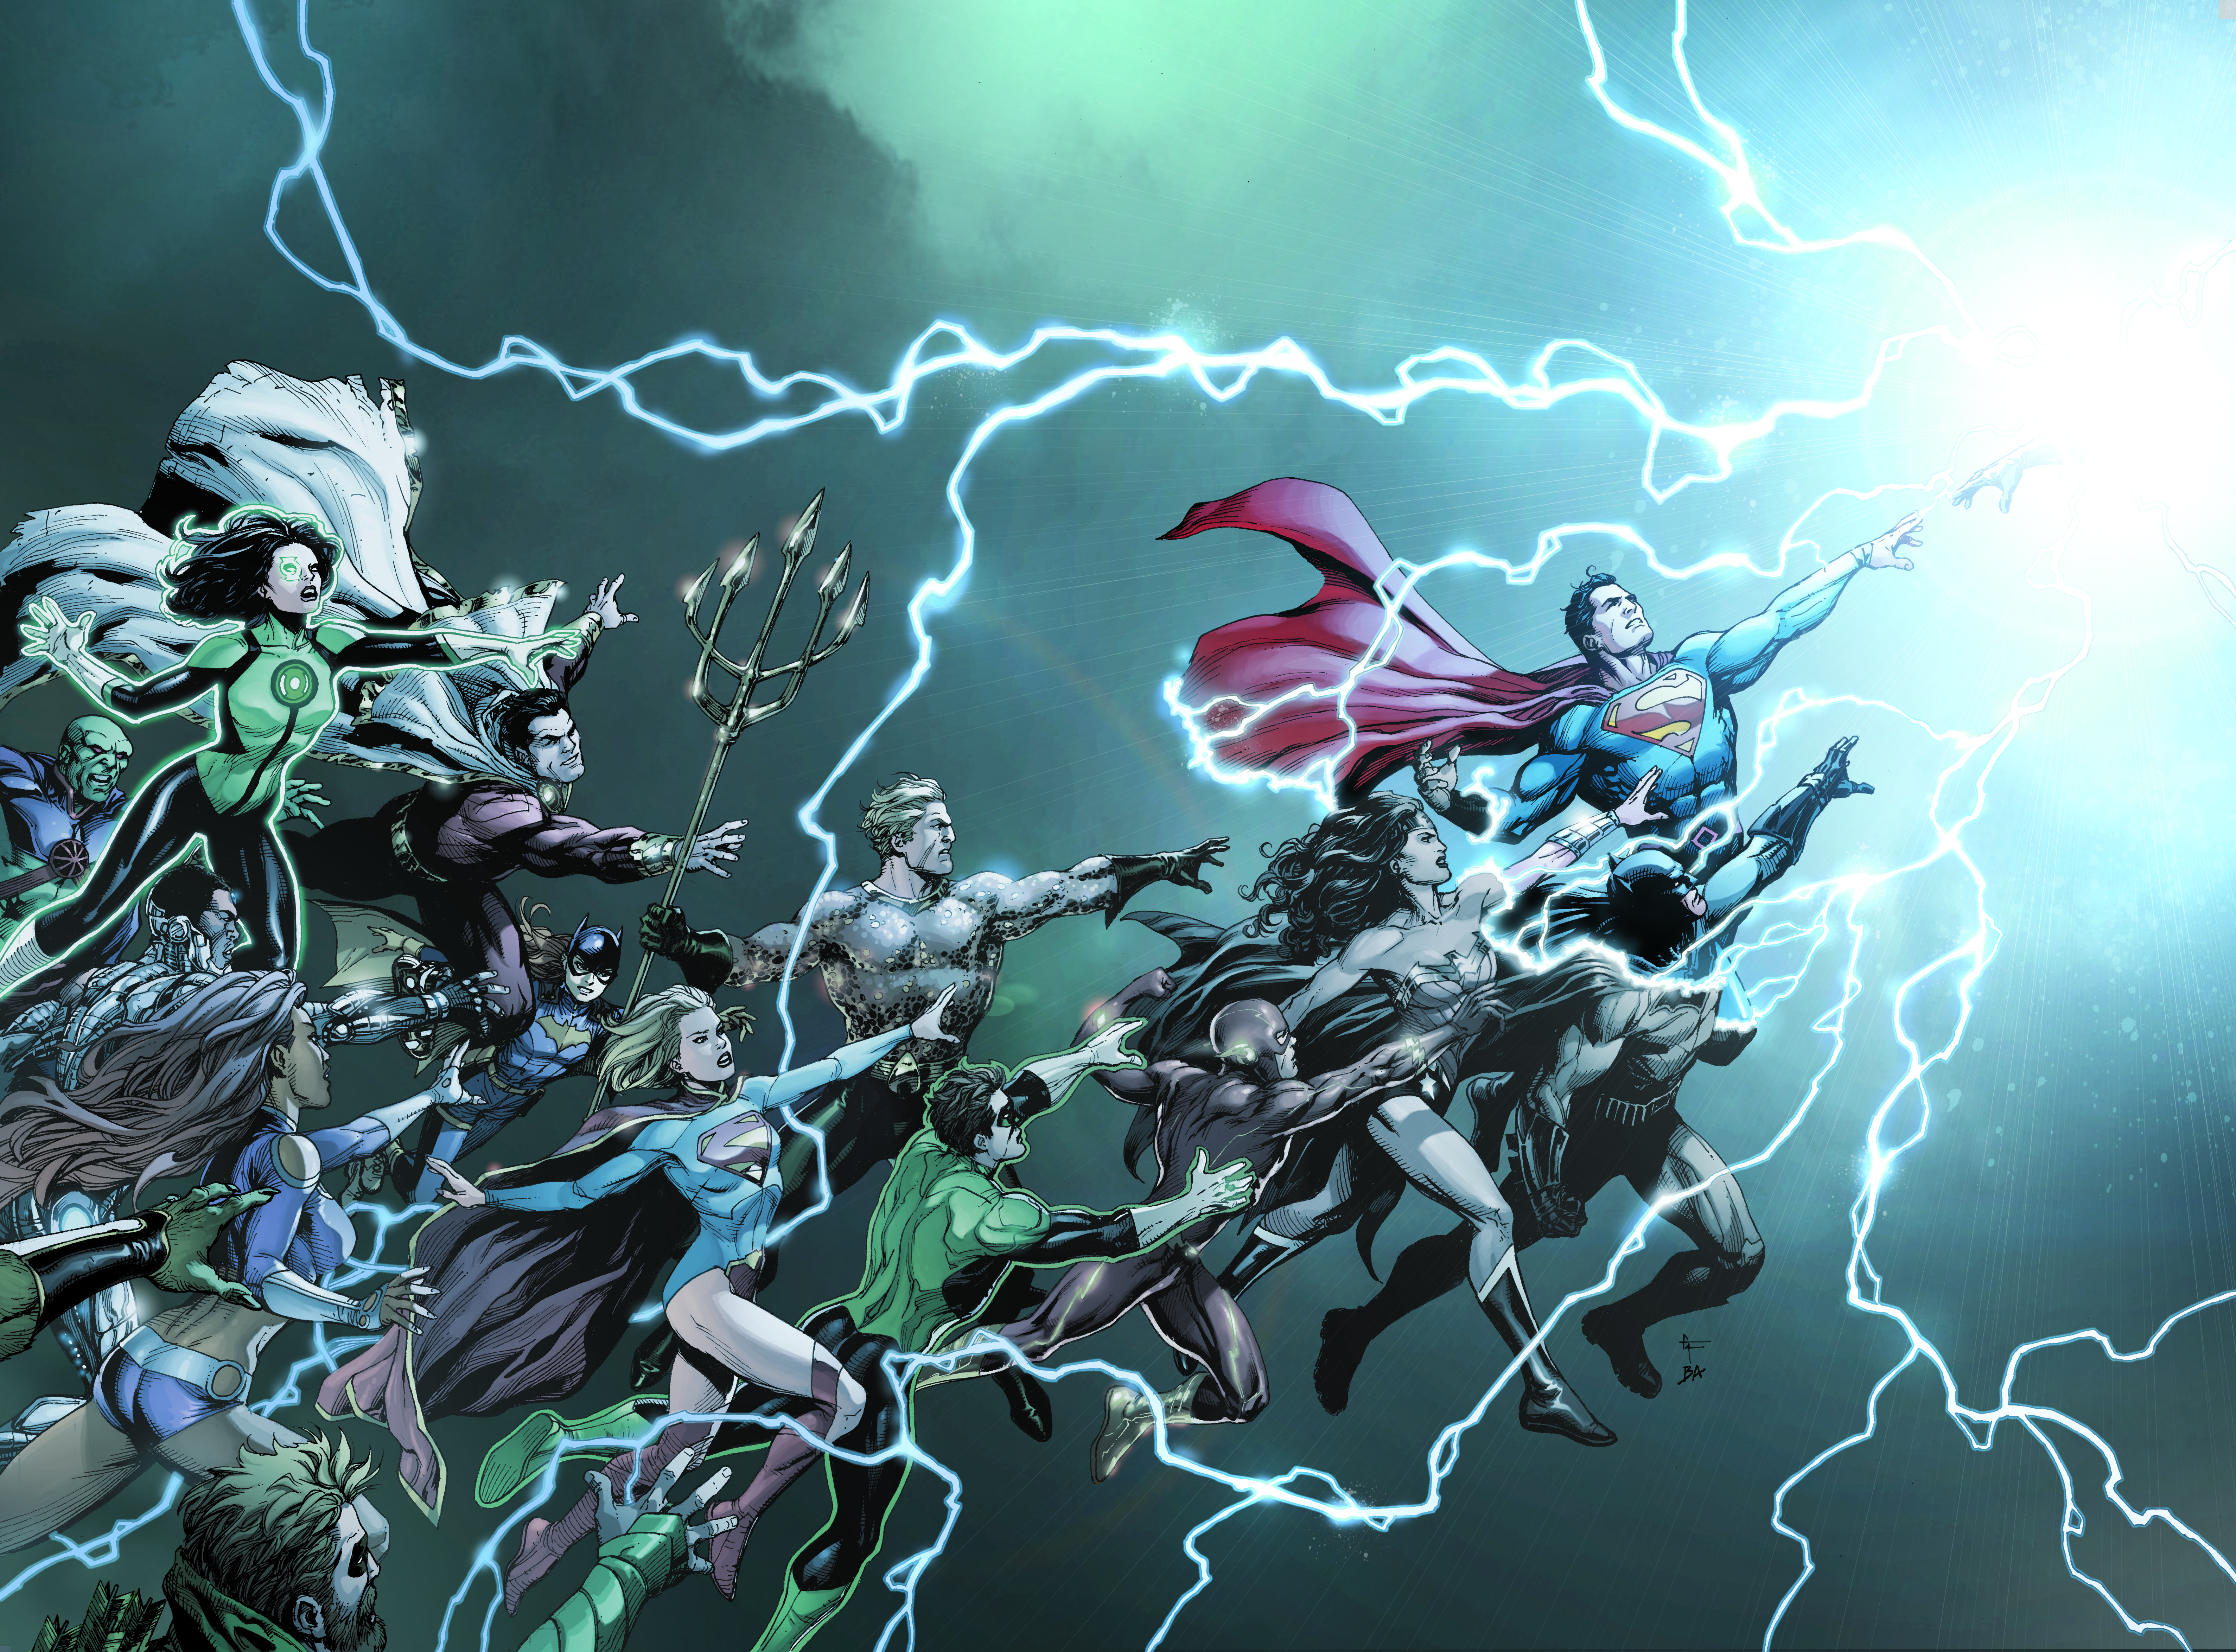 wonder woman, dc: rebirth, comics, aquaman, batgirl, batman, billy batson, cyborg (dc comics), dc comics, flash, green arrow, green lantern, hal jordan, j'onn j'onzz, jessica cruz (green lantern), justice league, koriand'r, martian manhunter, shazam (dc comics), starfire (dc comics), supergirl, superman phone background